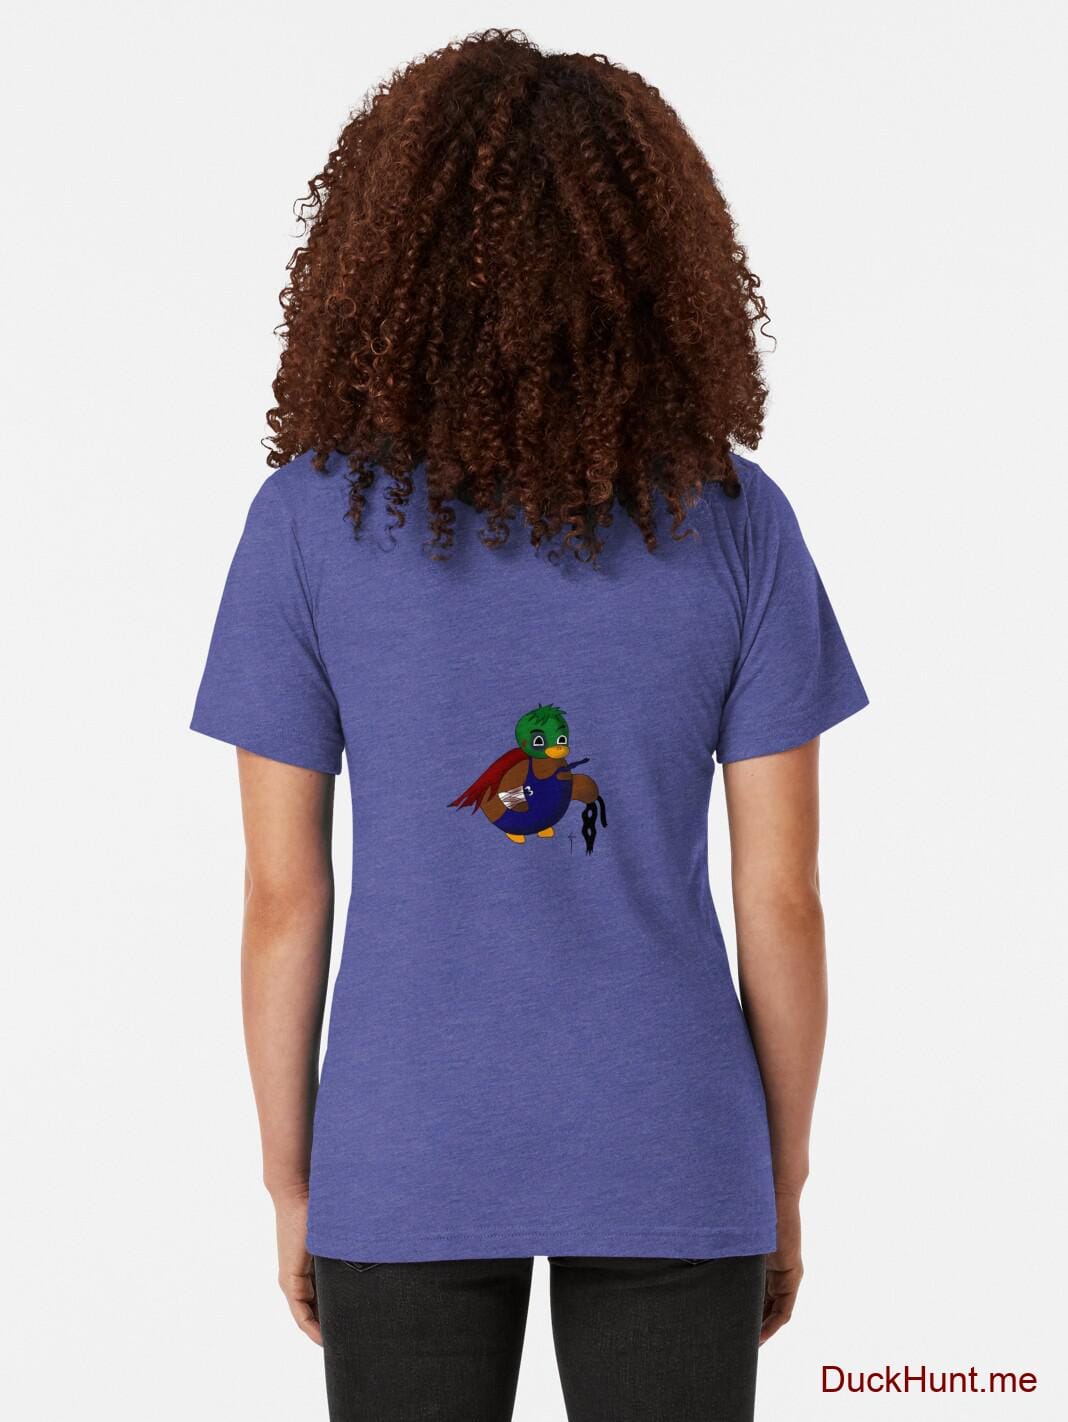 Dead DuckHunt Boss (smokeless) Royal Tri-blend T-Shirt (Back printed) alternative image 1